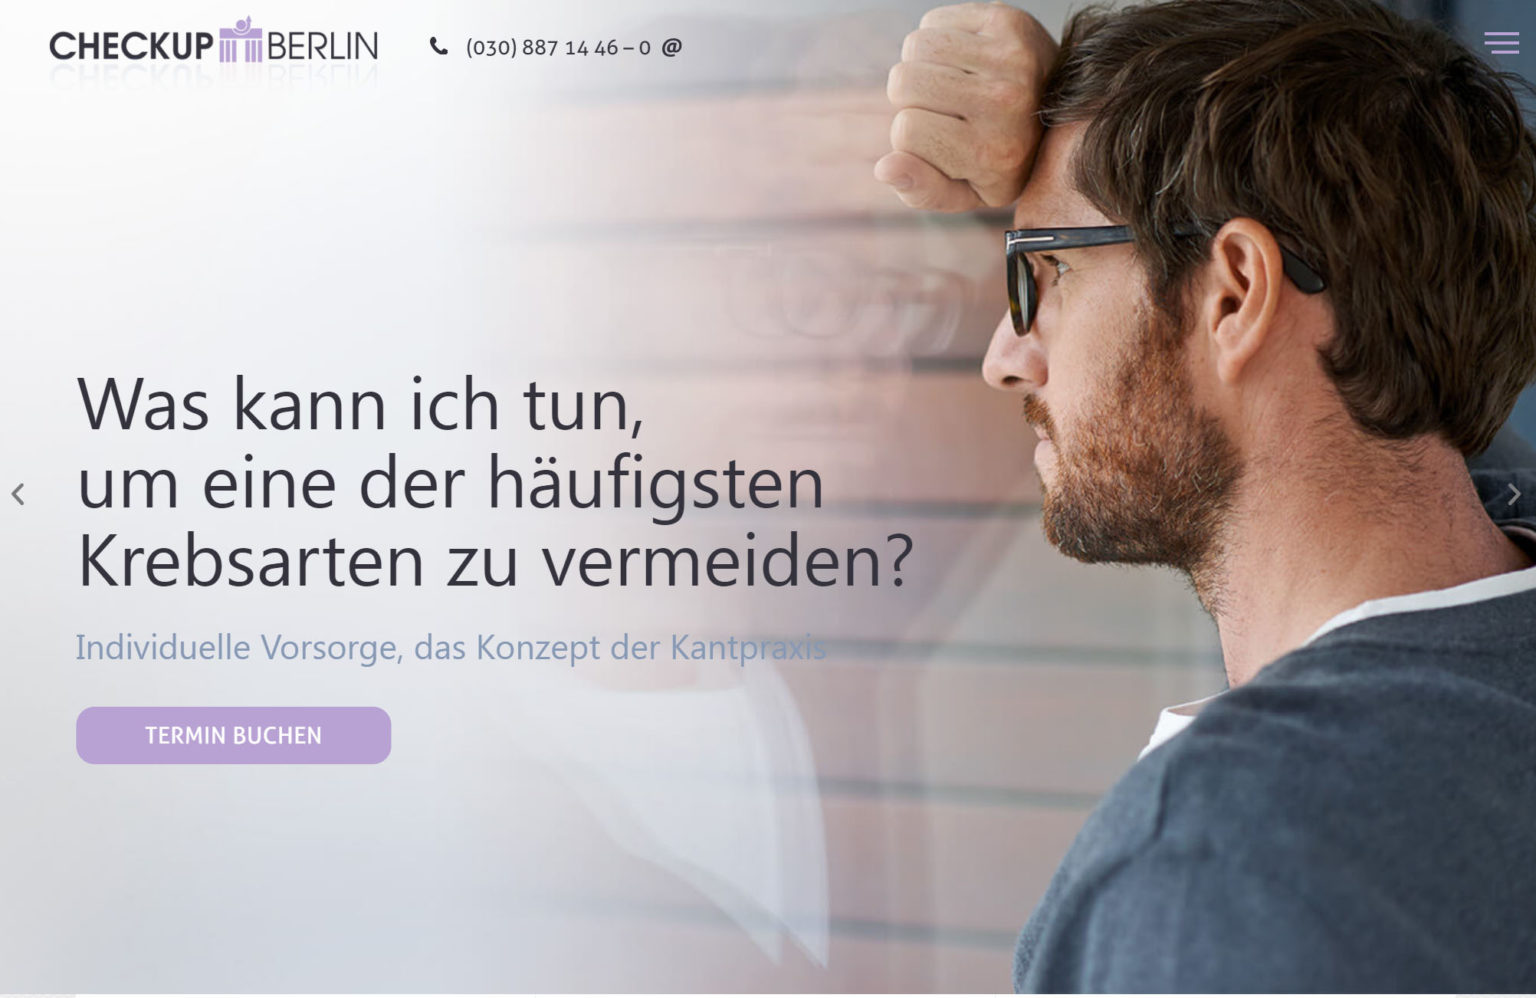 Referenzwebseite checkup berlin